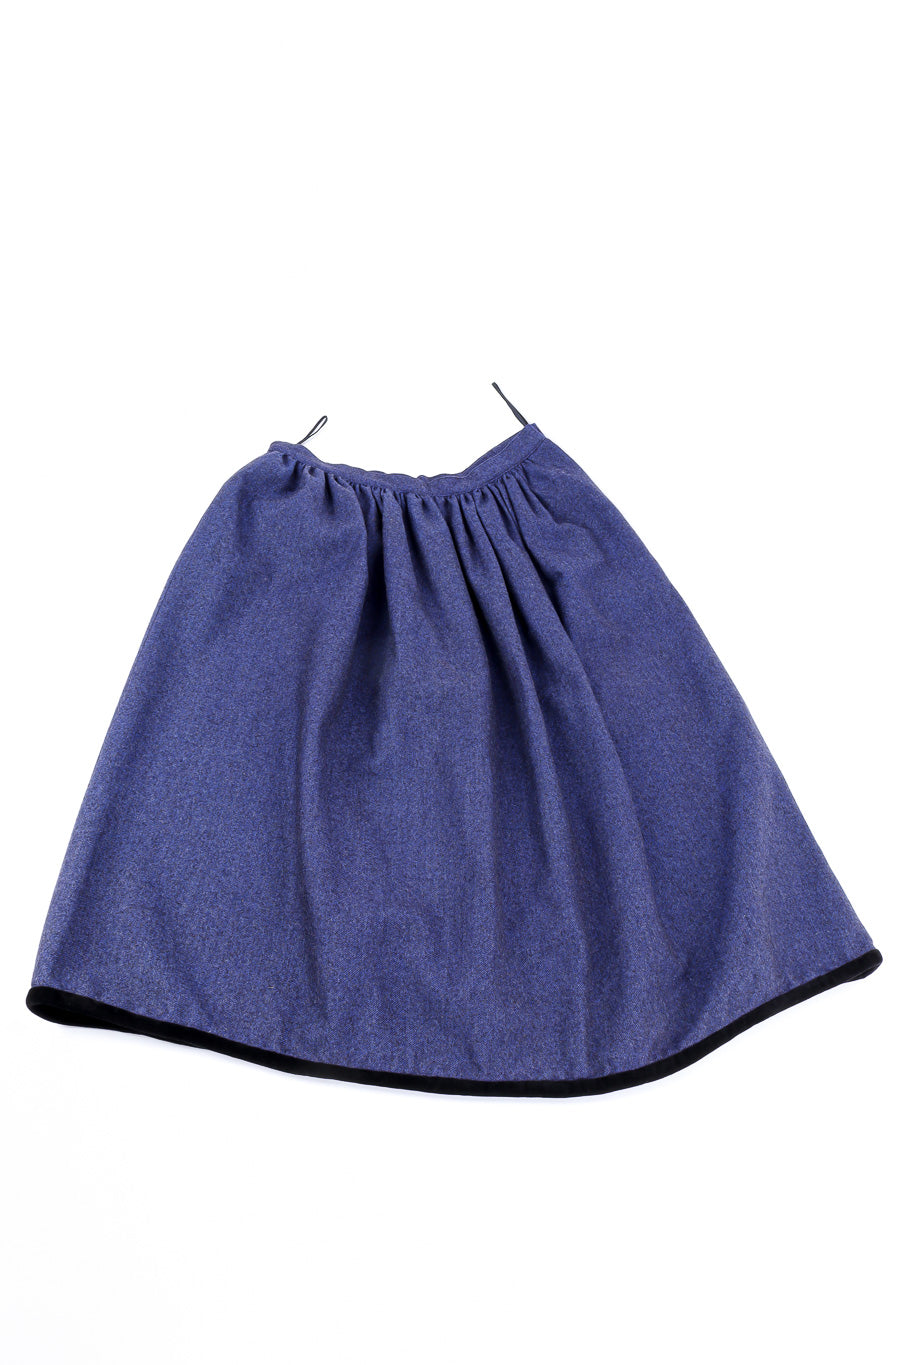 Valentino Boutique cotton denim top and skirt set flt-lay @recessla